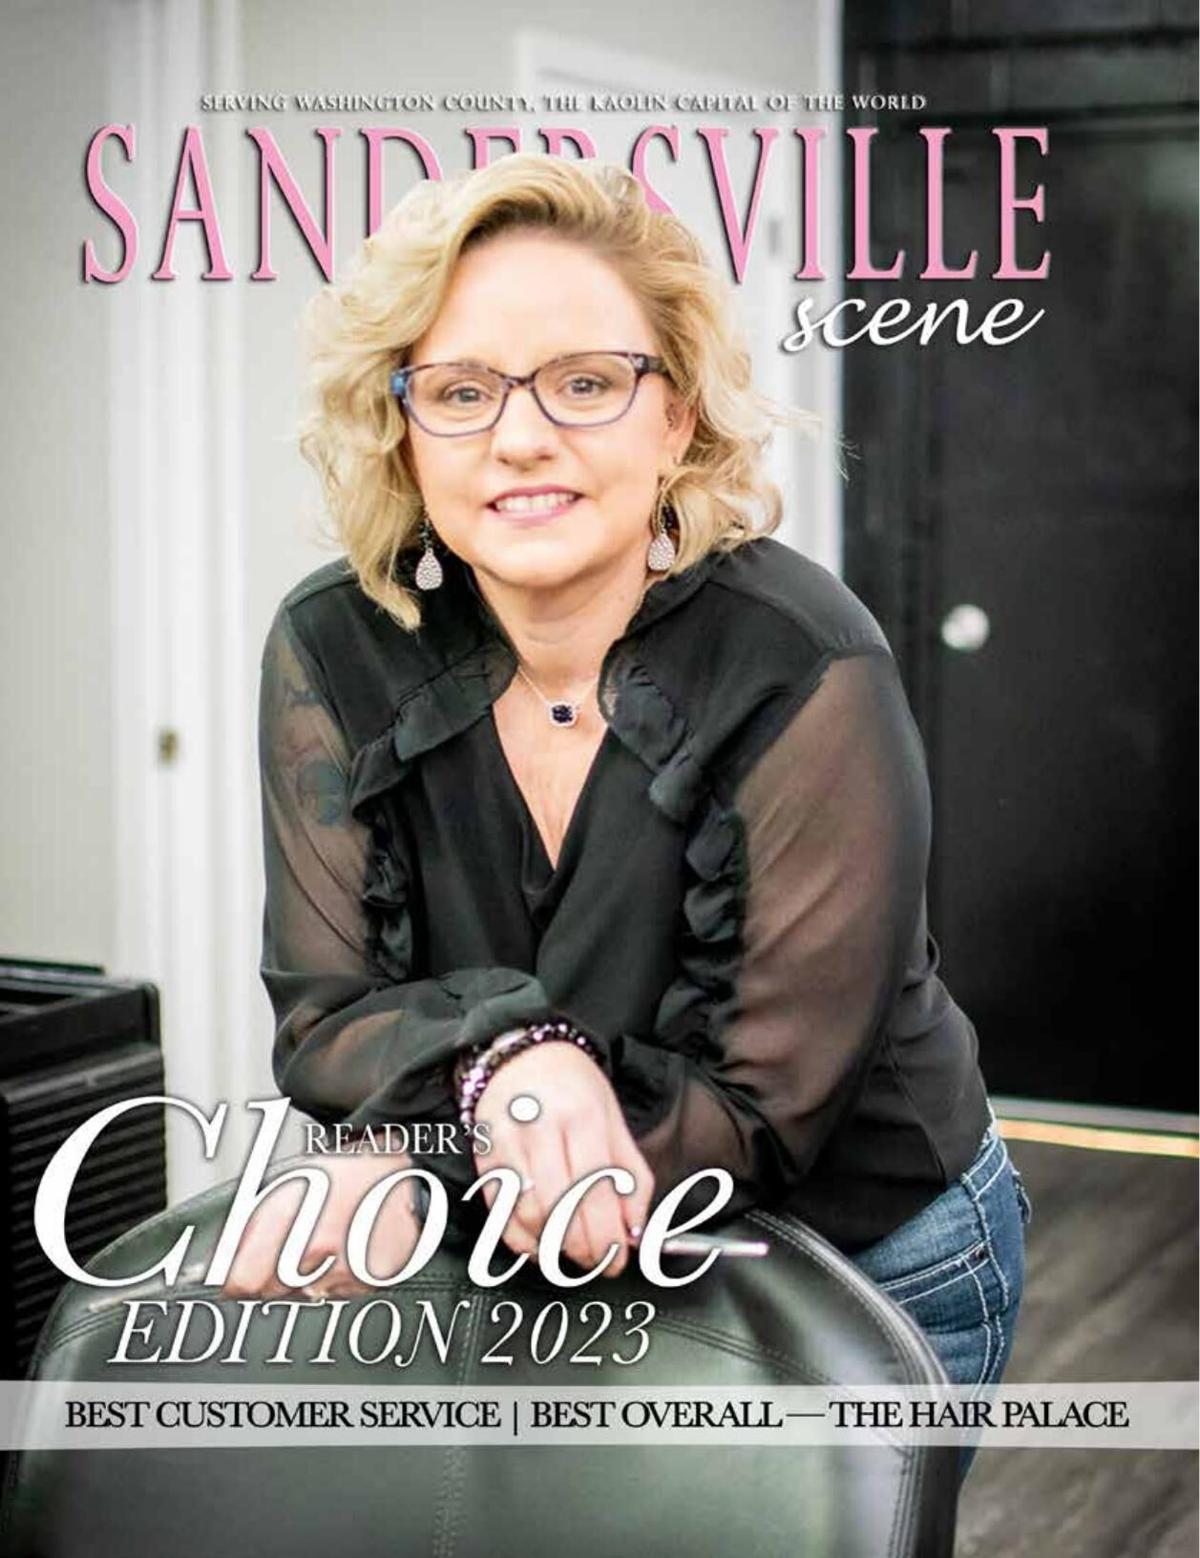 Sandersville Scene Reader's Choice 2023